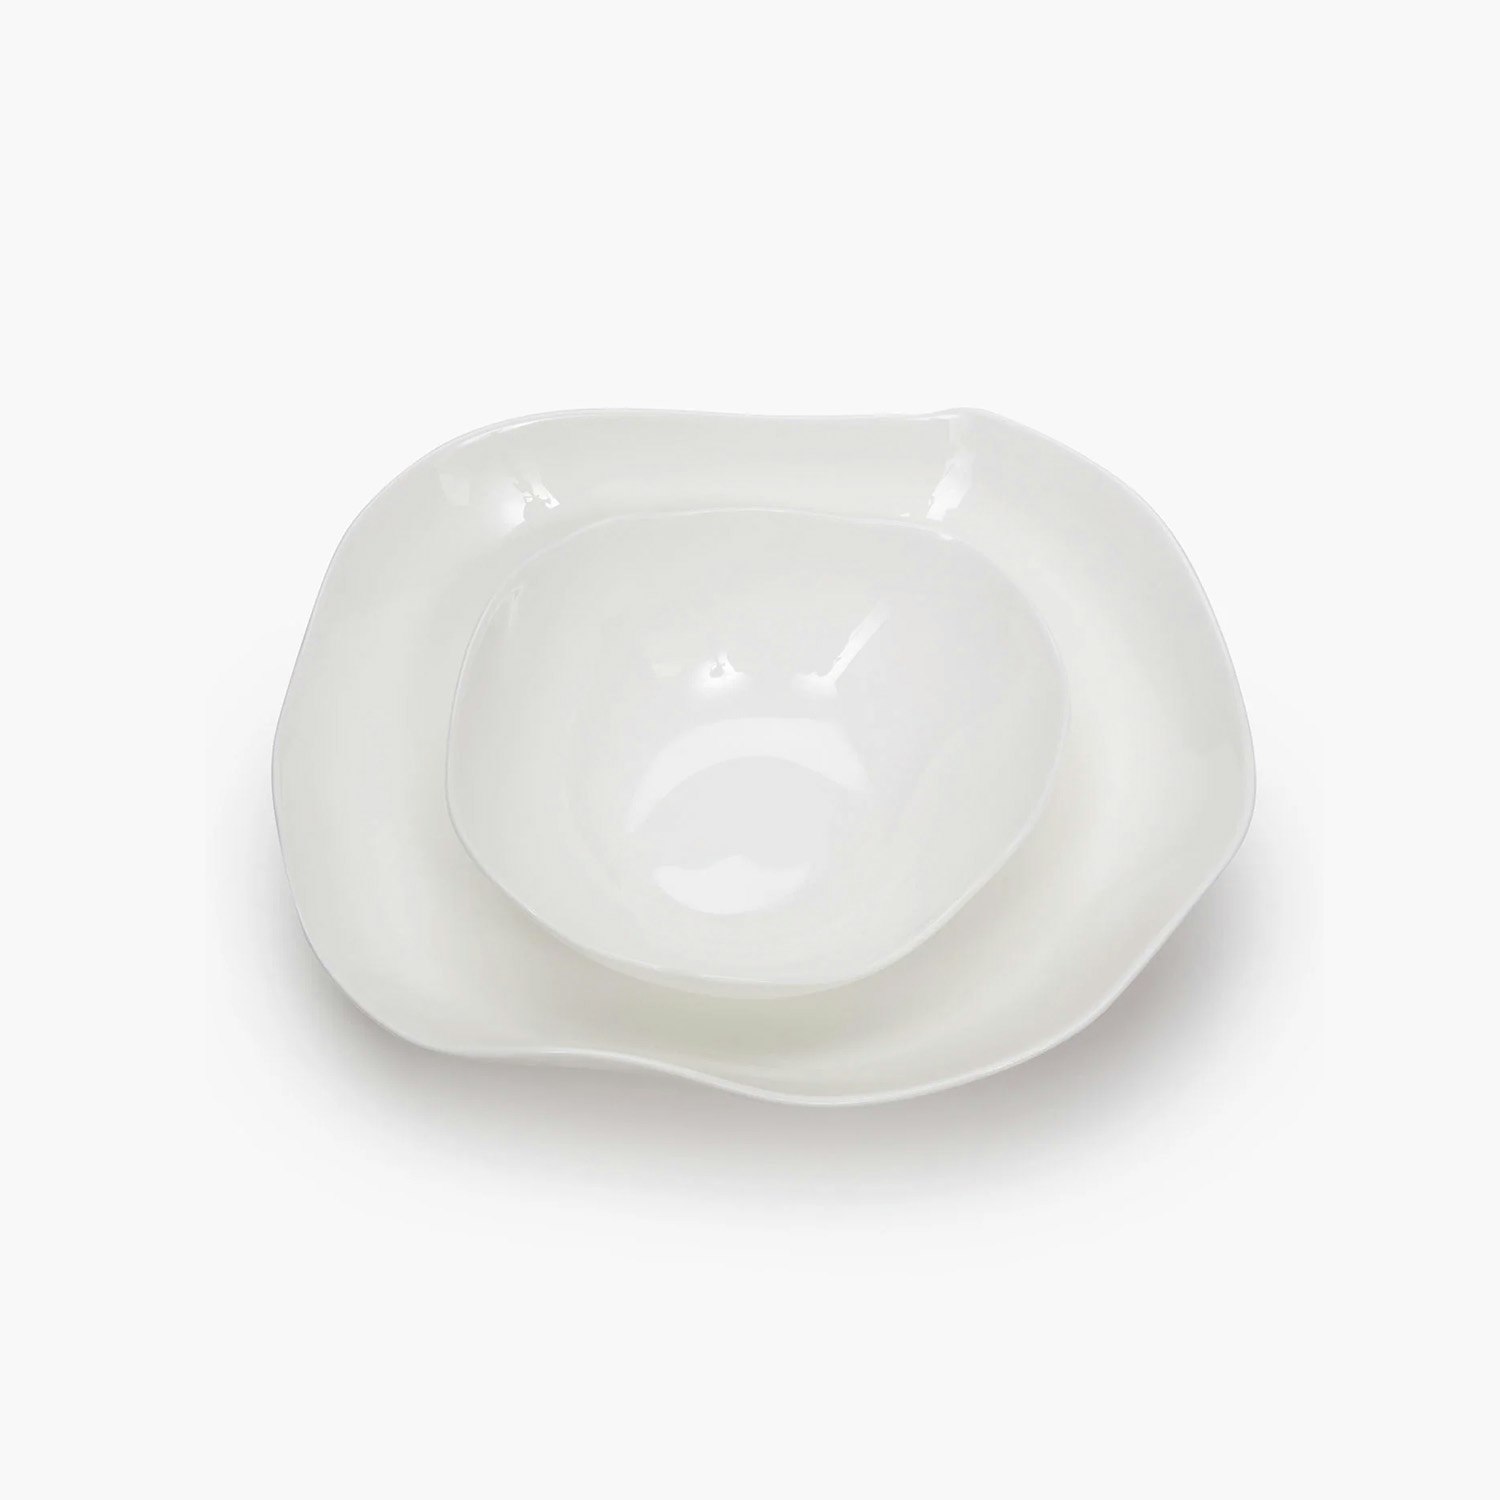 https://royaldesign.com/image/2/serax-bowl-white-hachi-boru-3